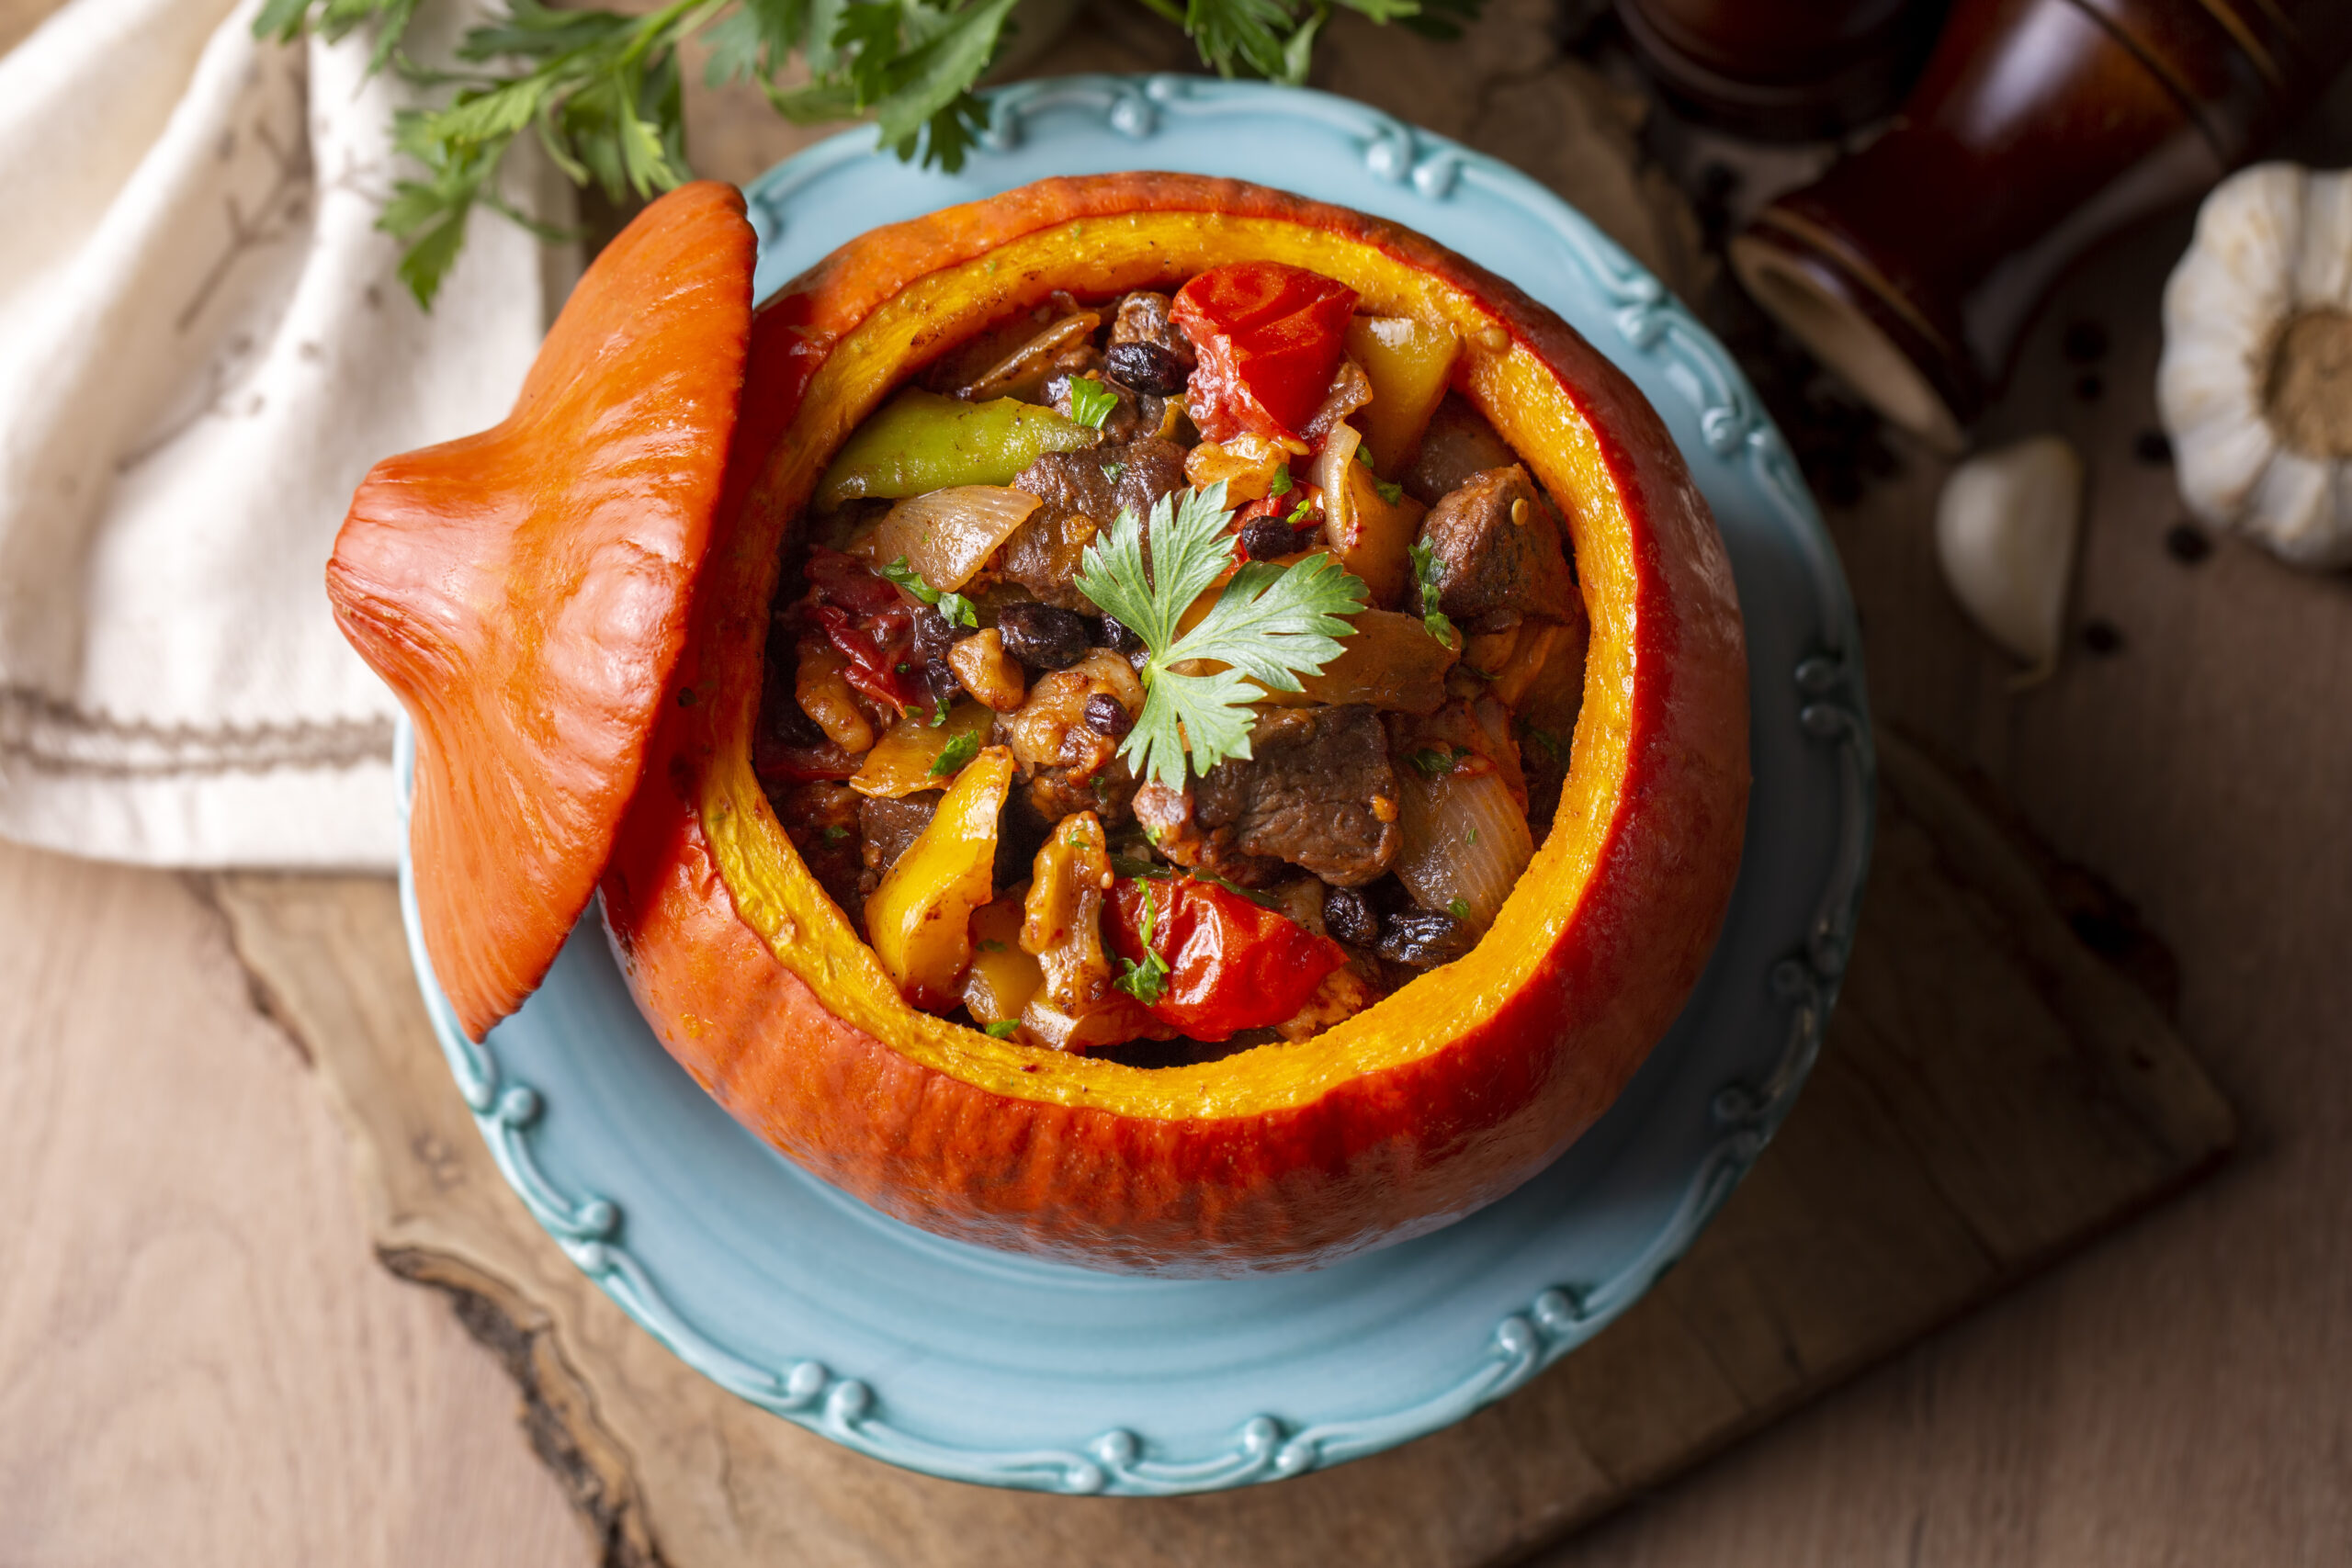 Stuffed pumpkin stew with meat and vegetables. Turkish name; bal kabagi dolmasi